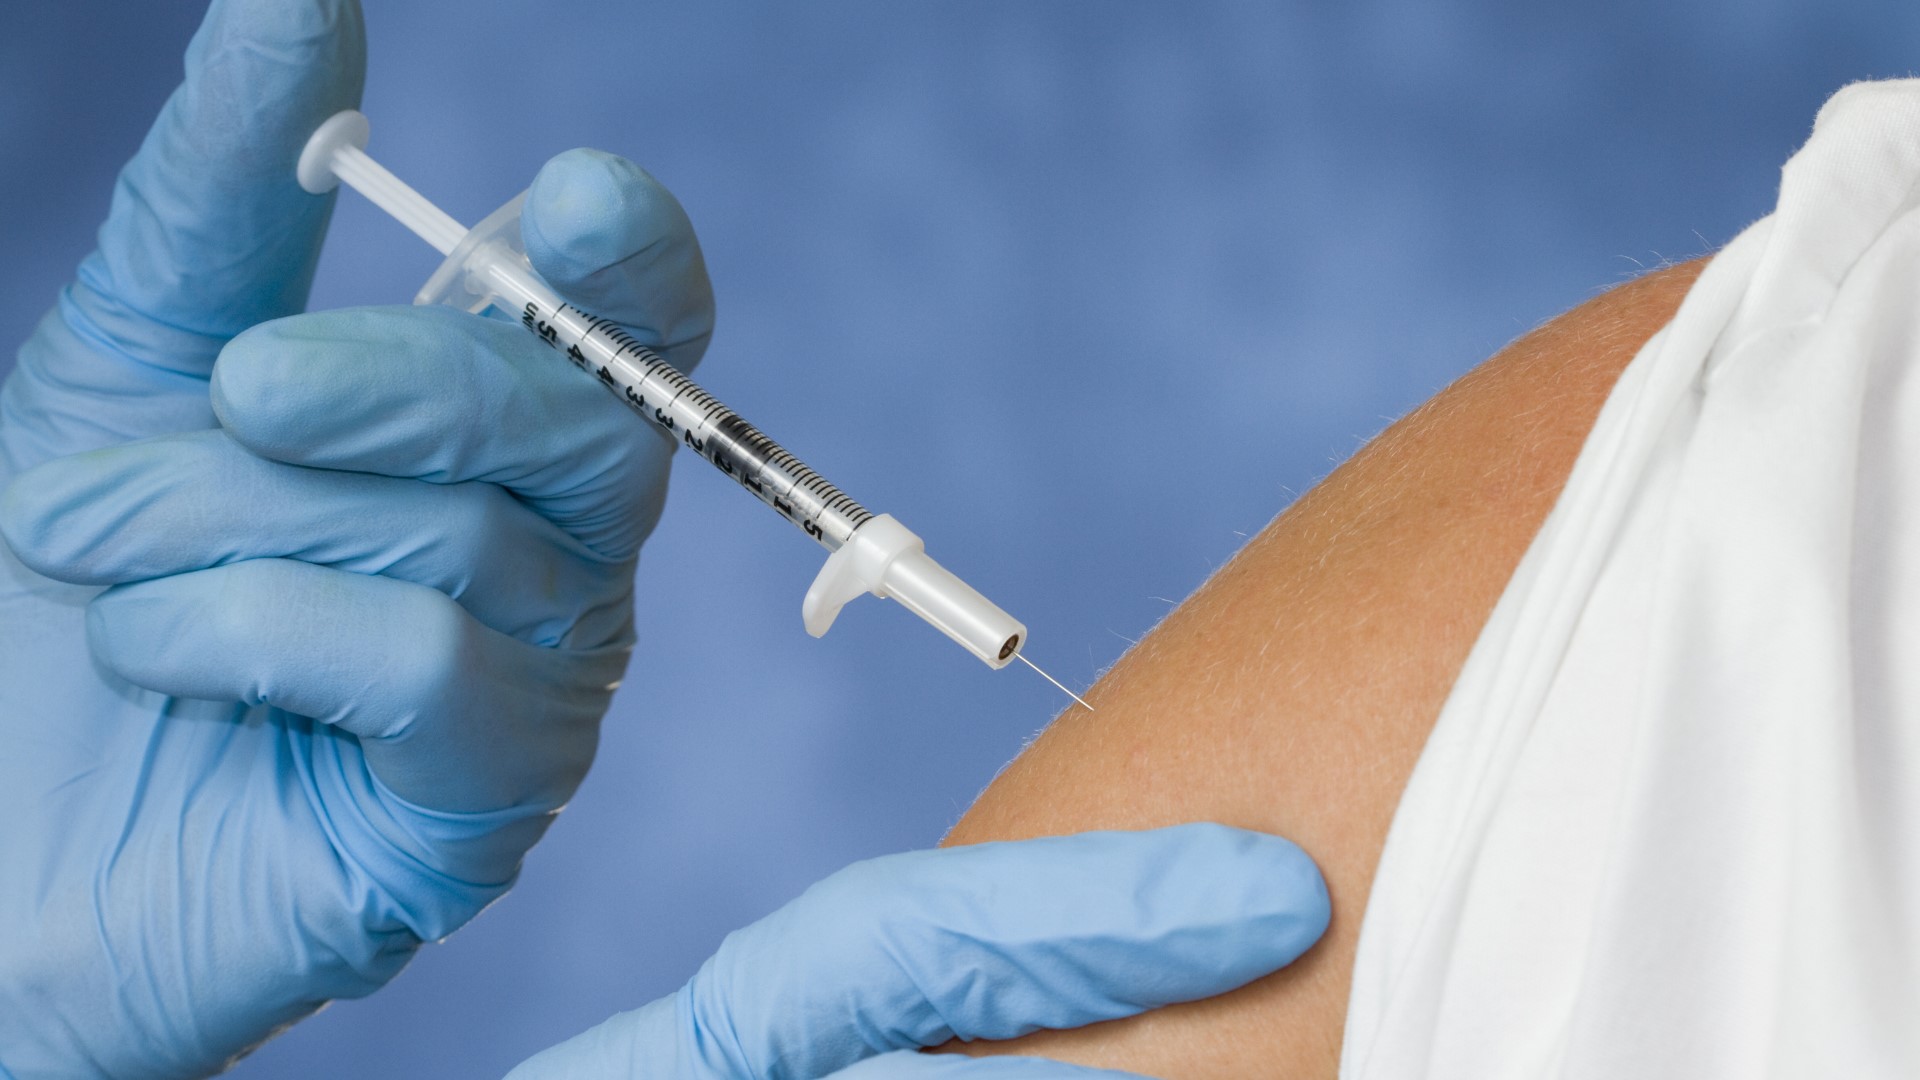 Flu vaccine clinics are being held across Arkansas ahead of the upcoming flu season.